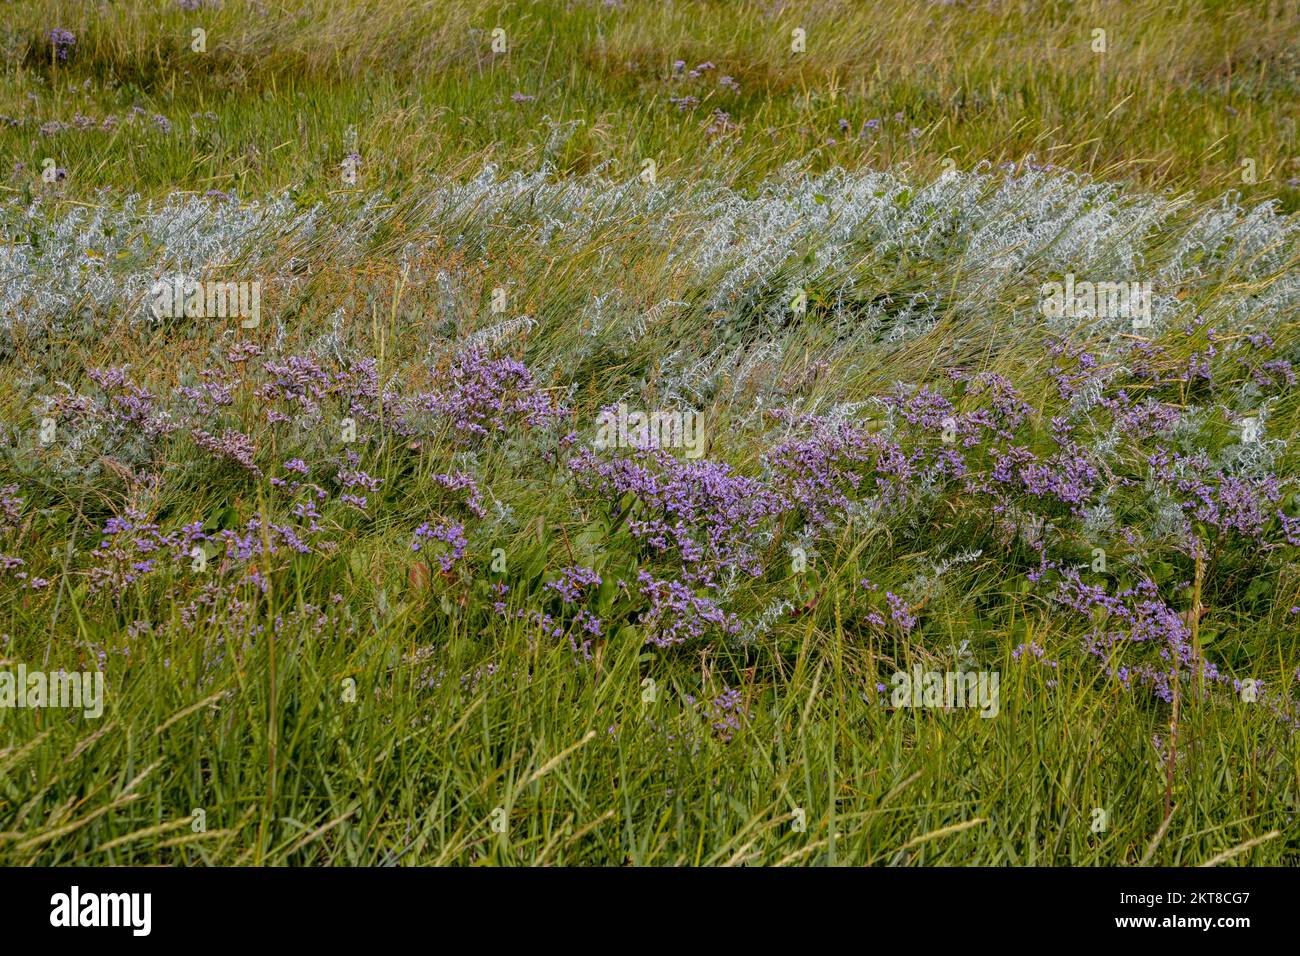 Common sea lavender also called Limonium vulgare or Strandflieder Stock Photo